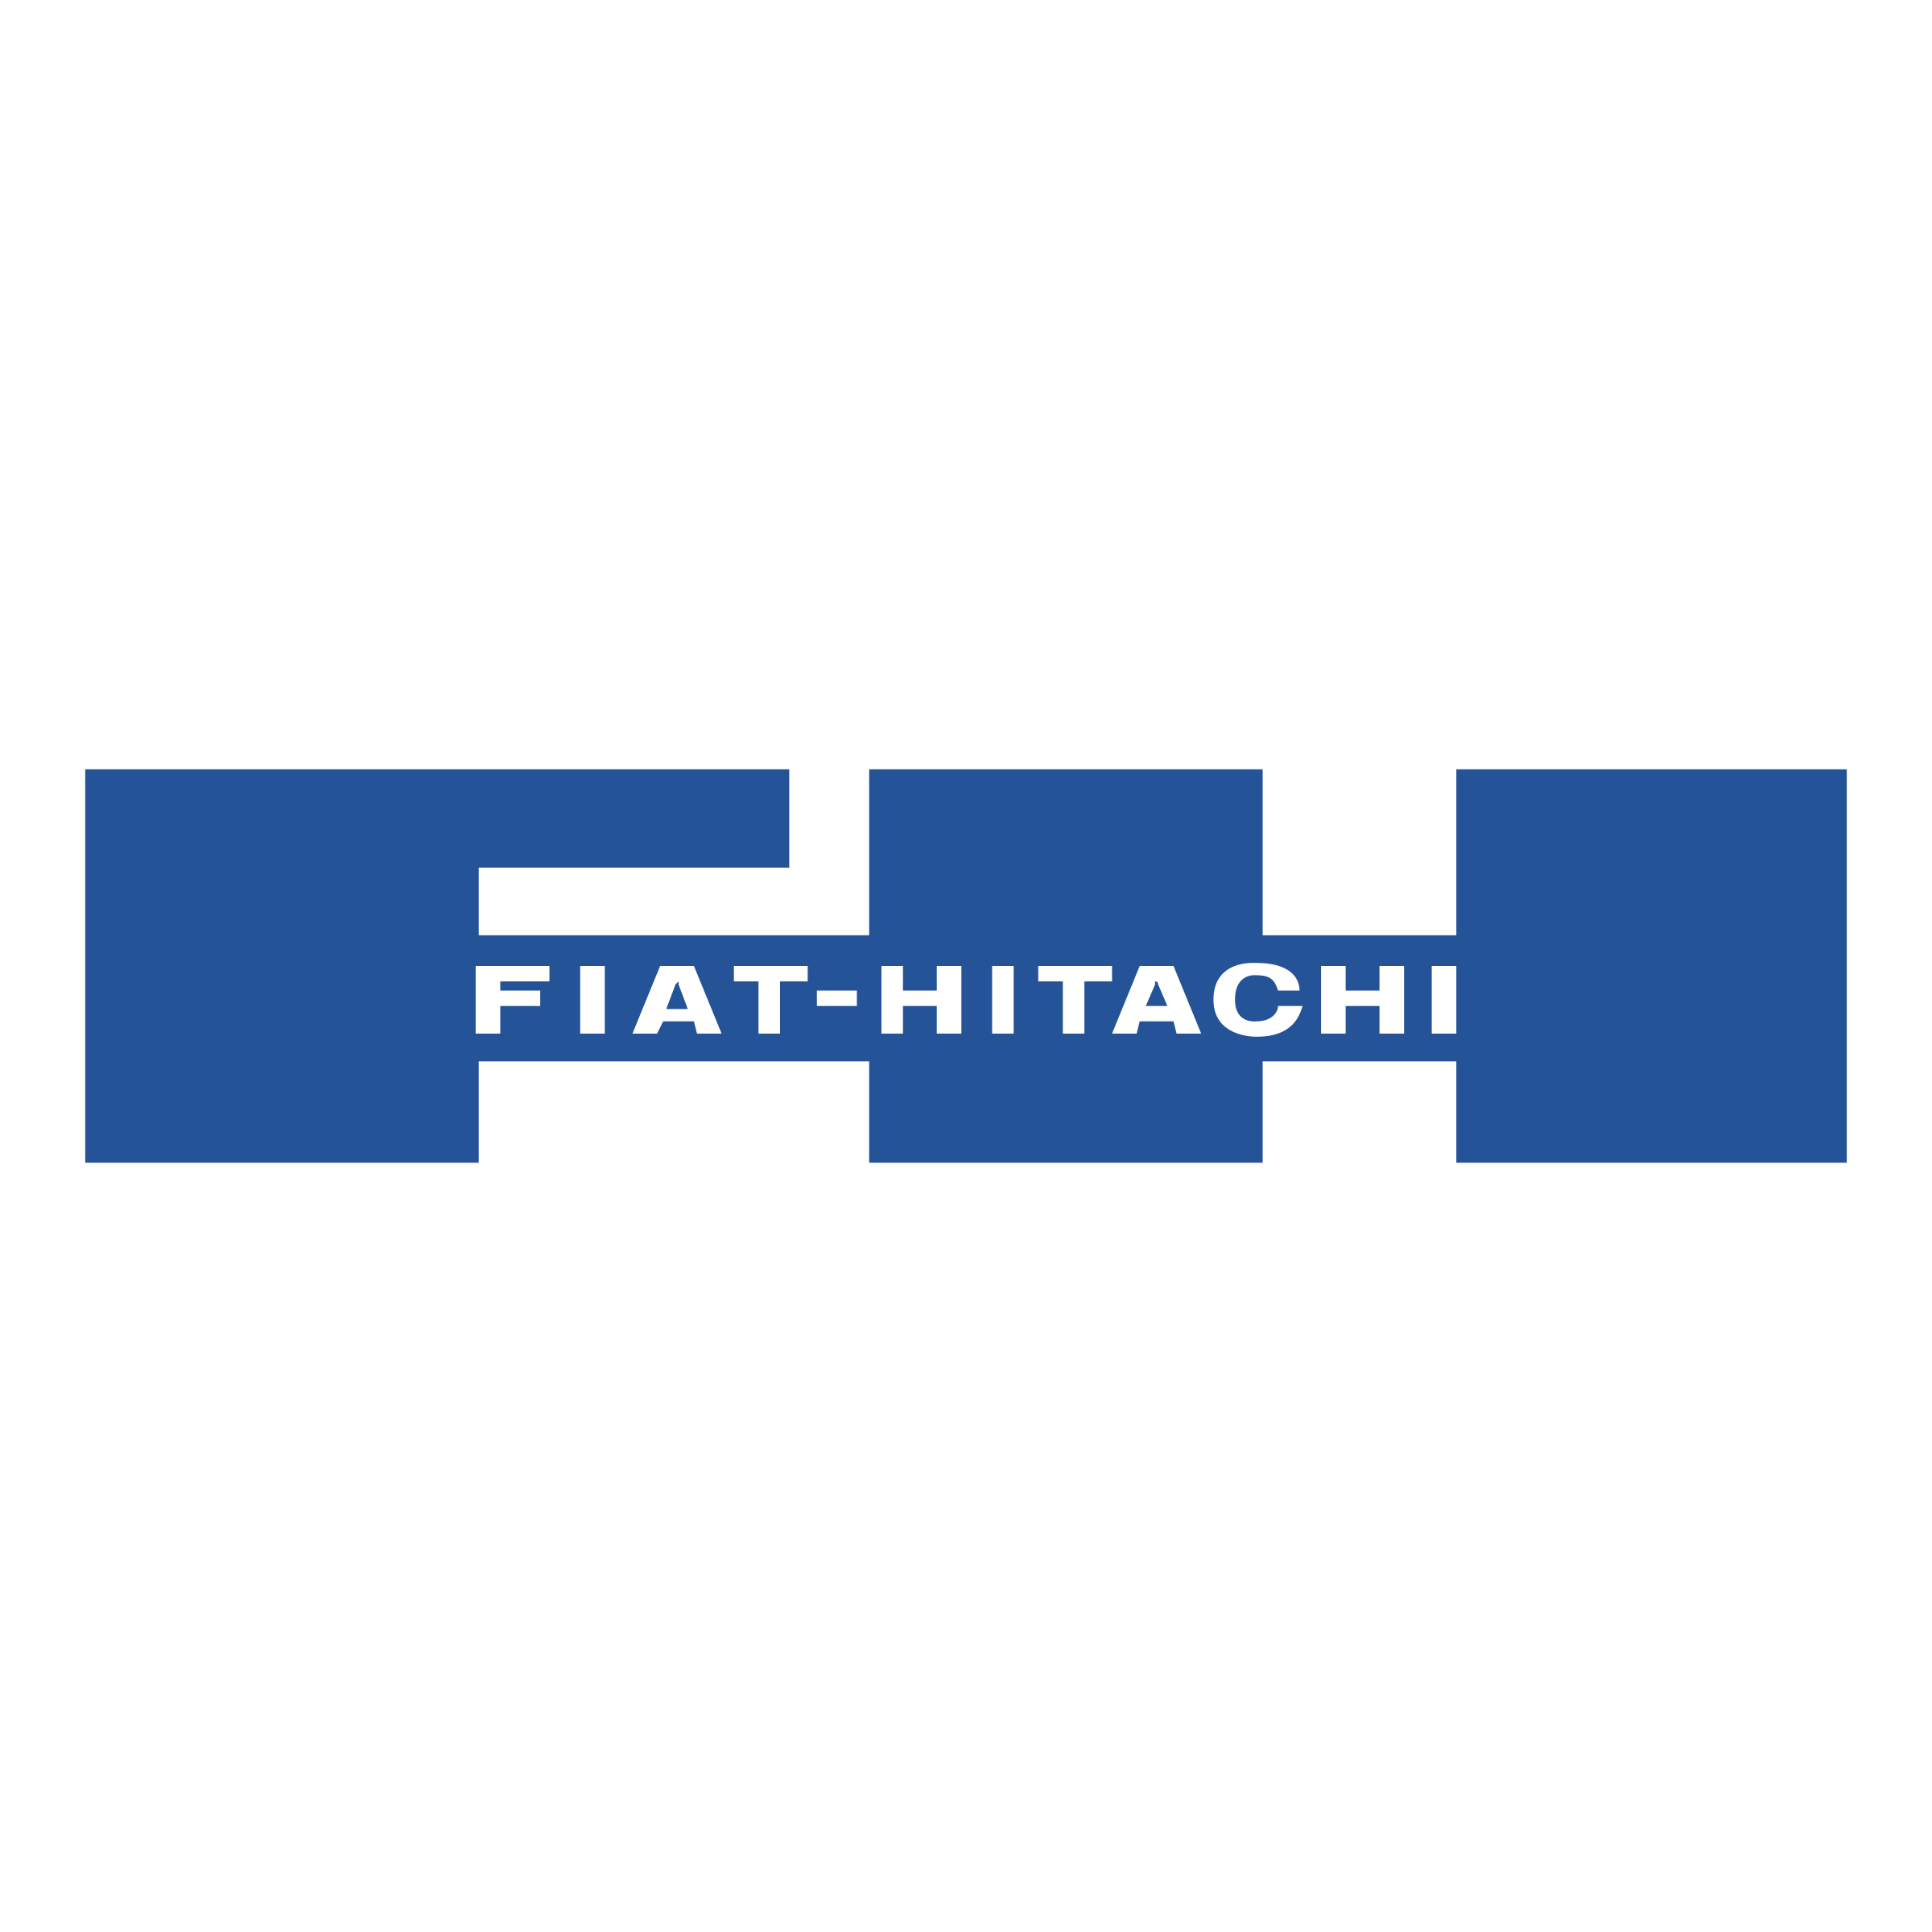 fiat-hitachi-logo-png-transparent